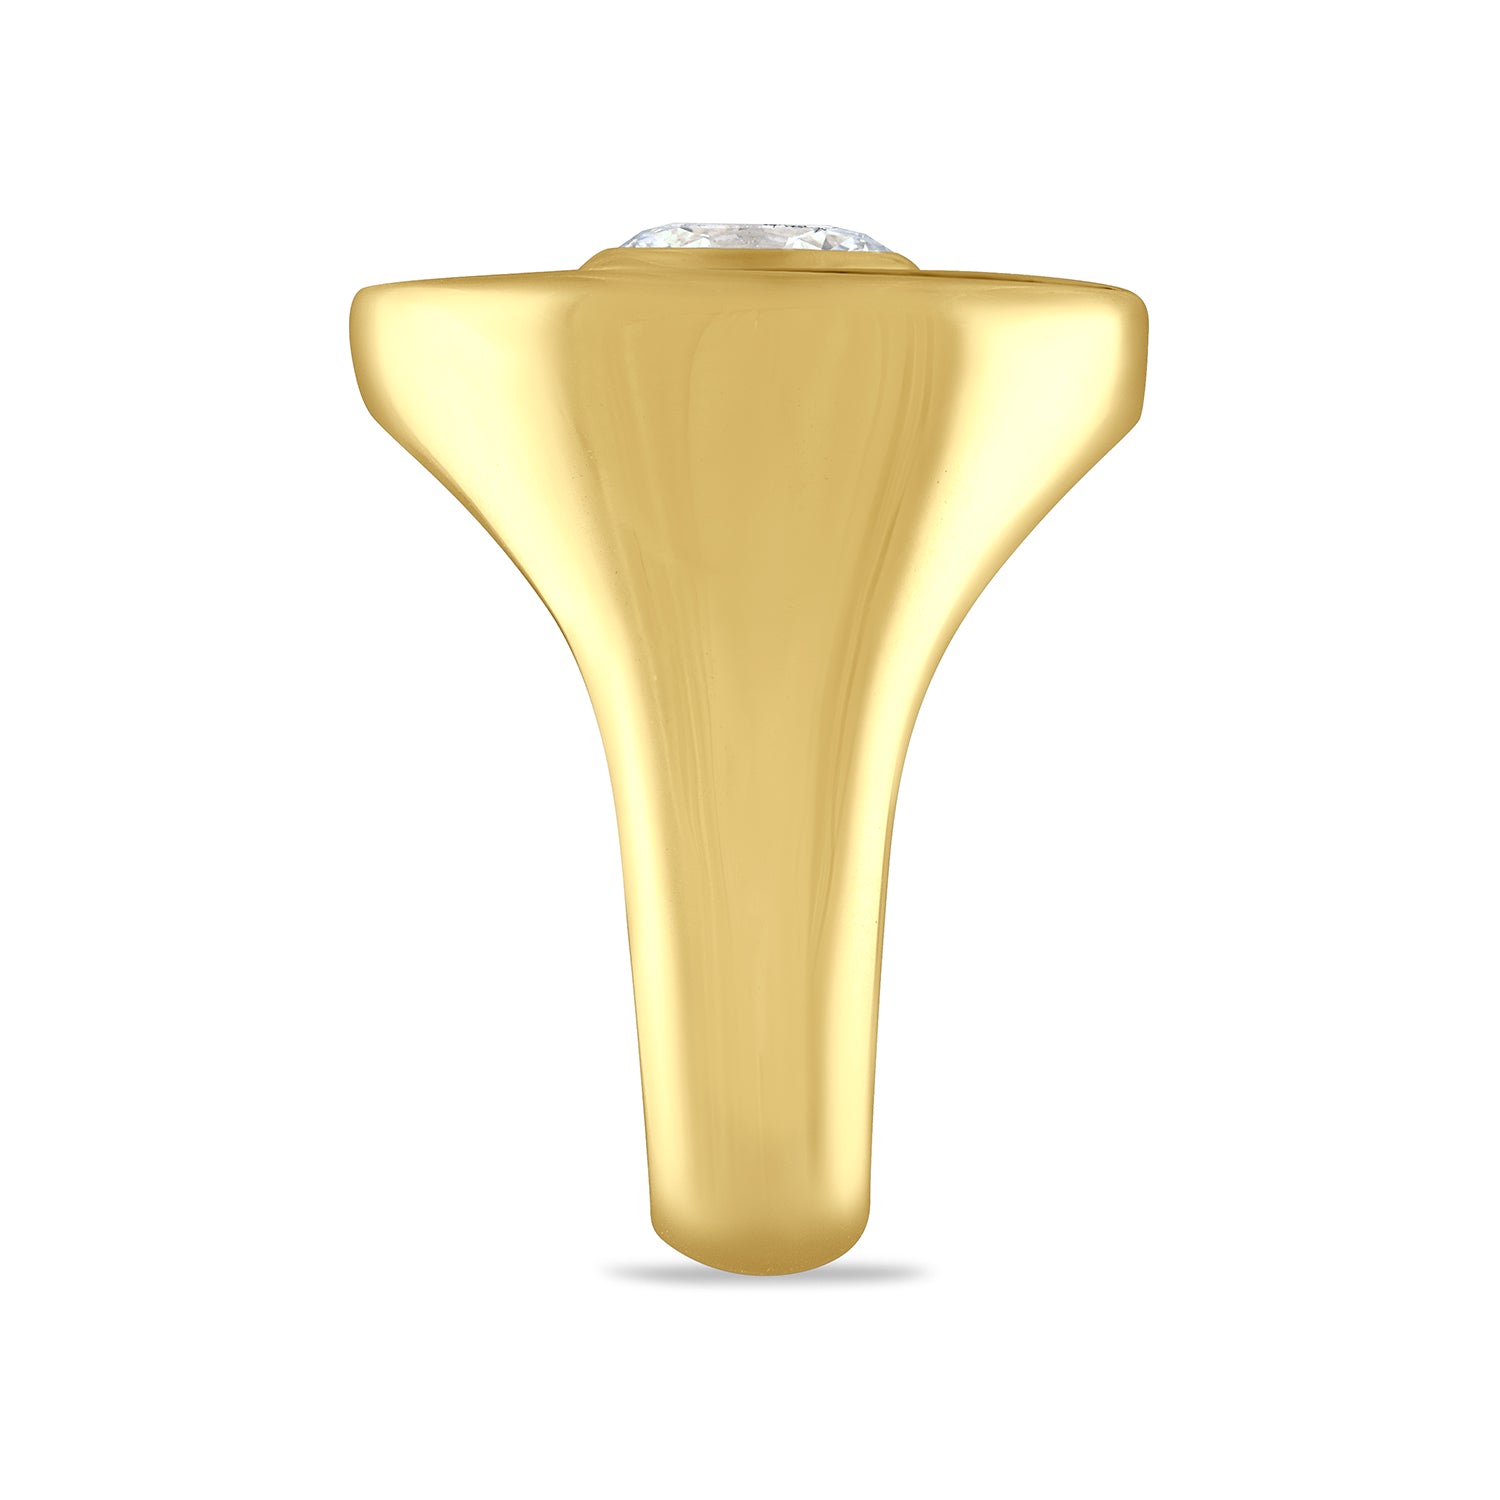 Gold emblem ring